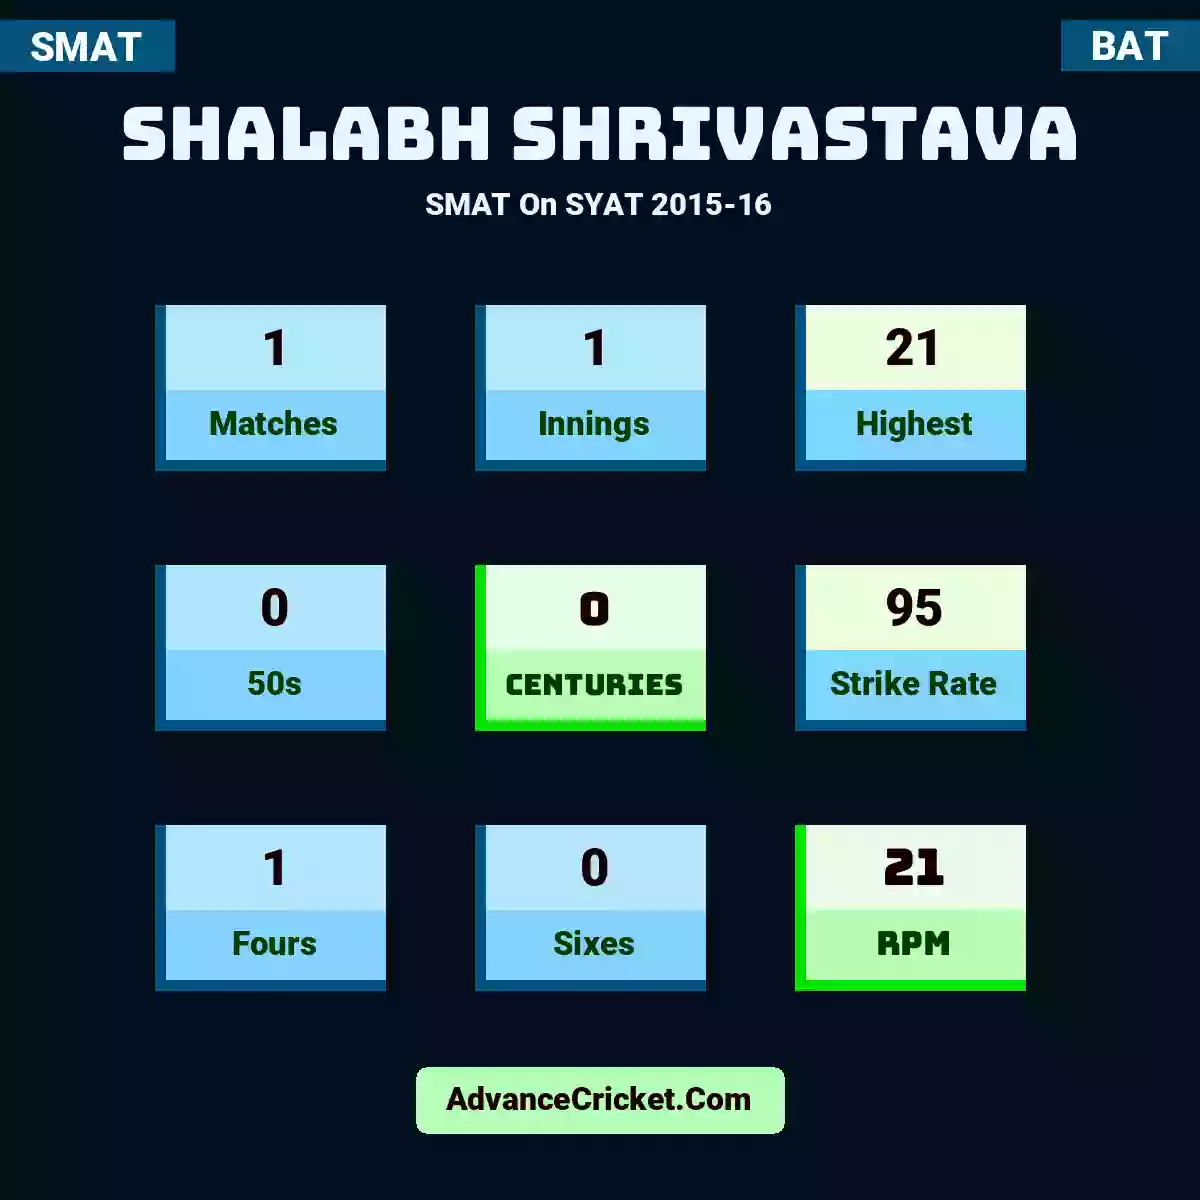 Shalabh Shrivastava SMAT  On SYAT 2015-16, Shalabh Shrivastava played 1 matches, scored 21 runs as highest, 0 half-centuries, and 0 centuries, with a strike rate of 95. S.Shrivastava hit 1 fours and 0 sixes, with an RPM of 21.